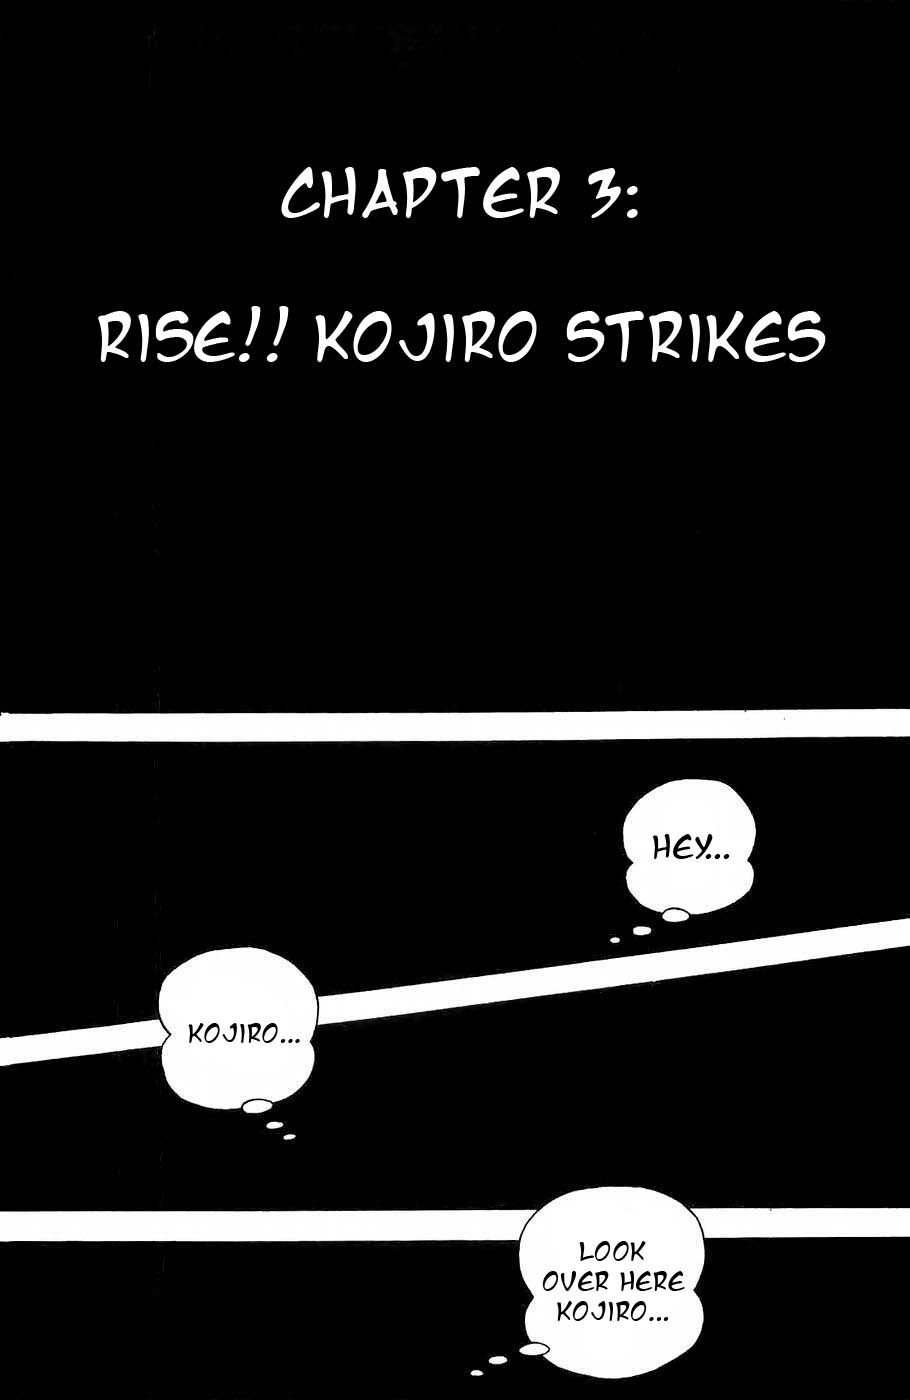 Fuuma no Kojiro Vol. 1 Ch. 3 Rise! Kojiro Strikes